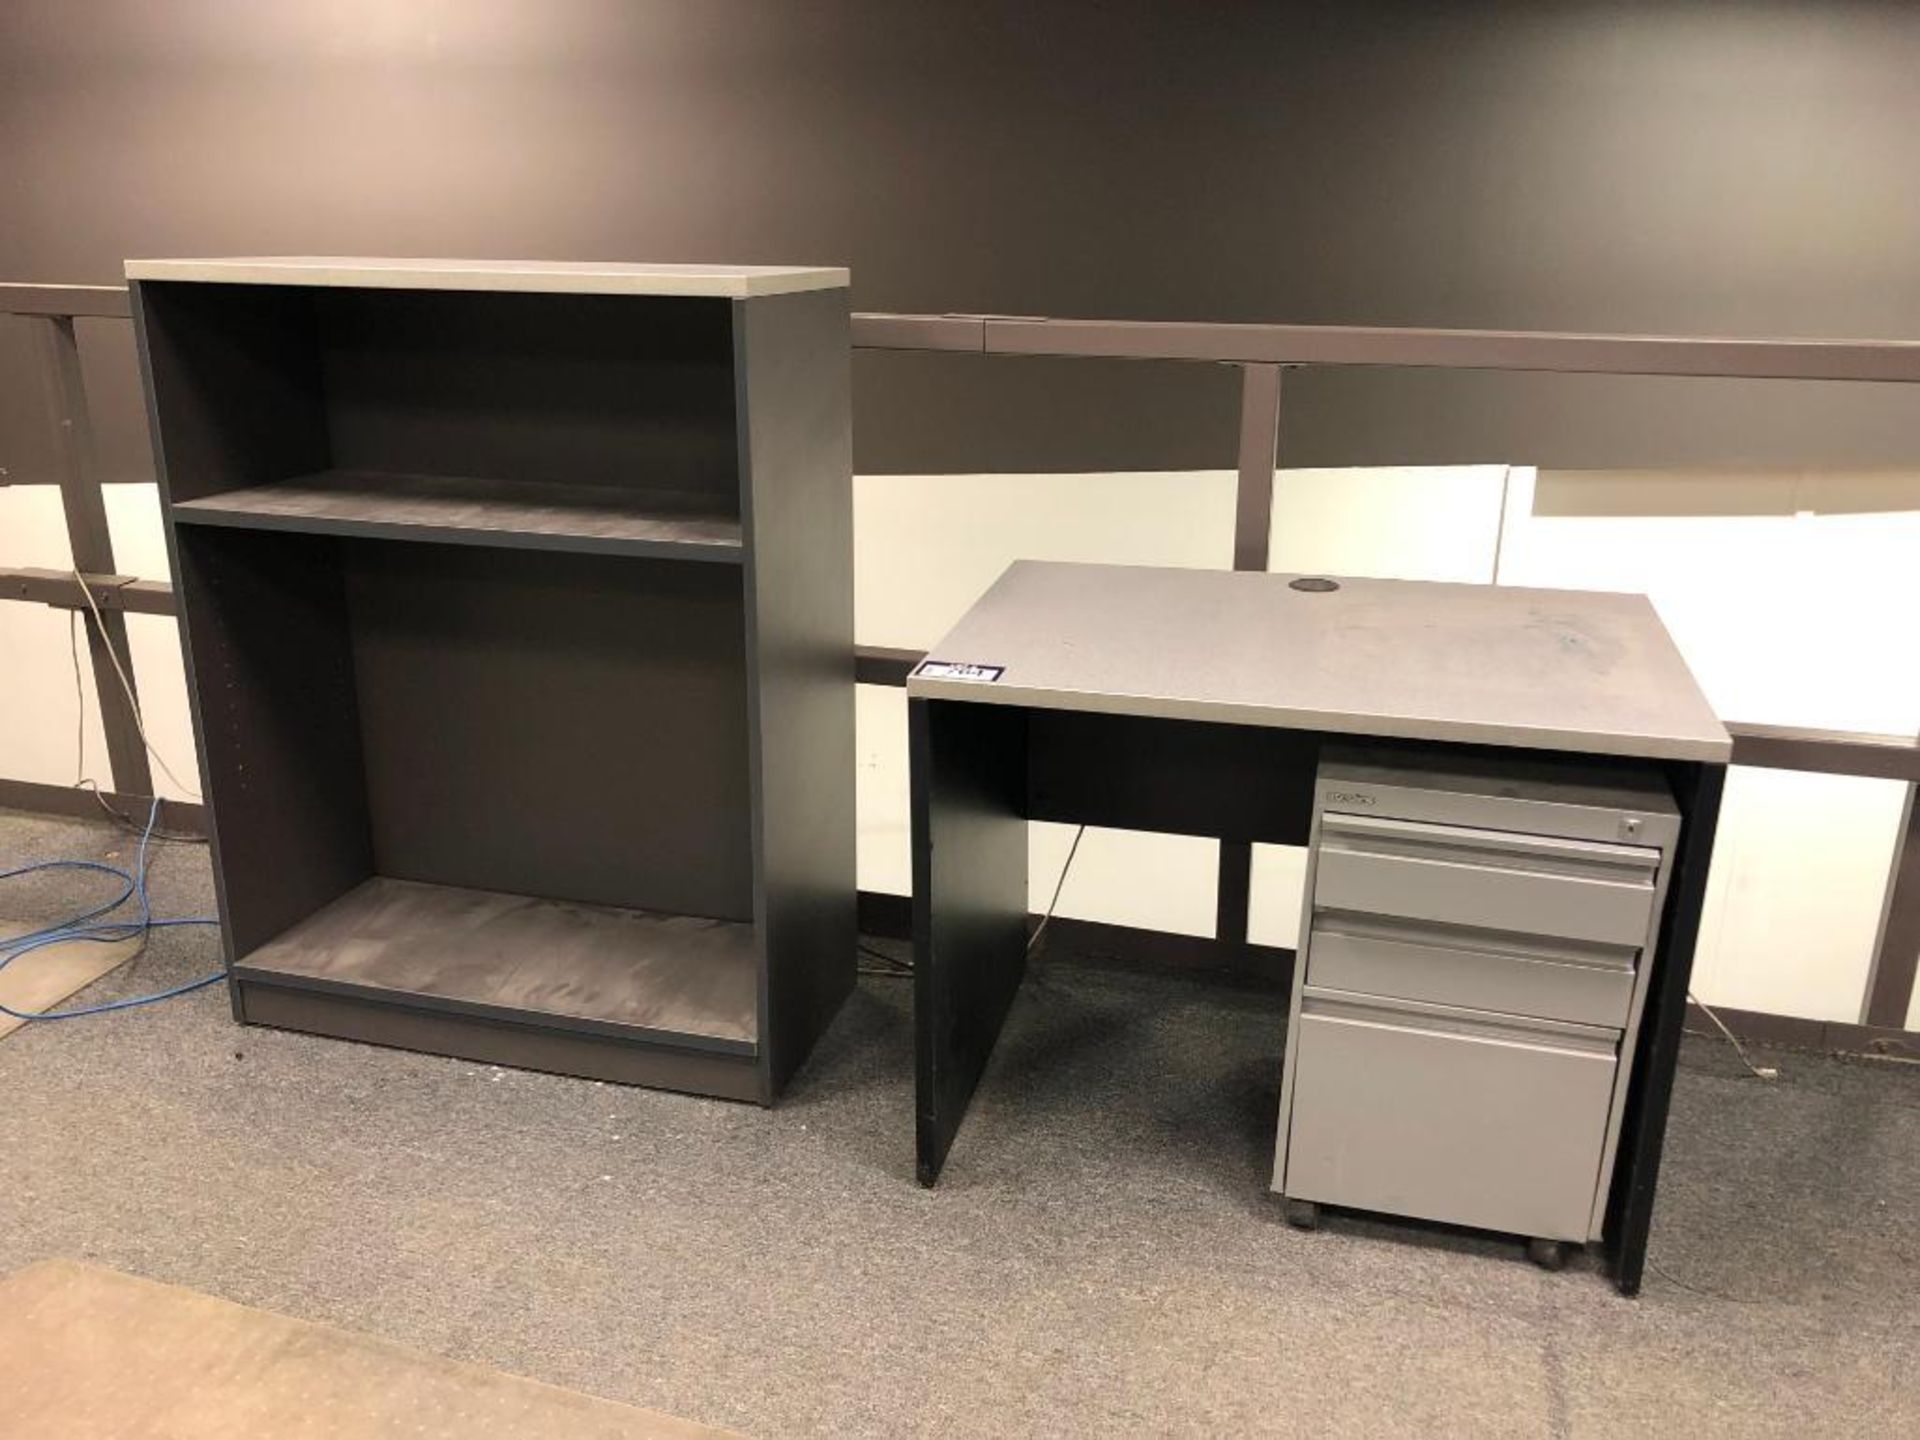 Desk and Bookshelf with Steeline 2-Drawer Filing Cabinet